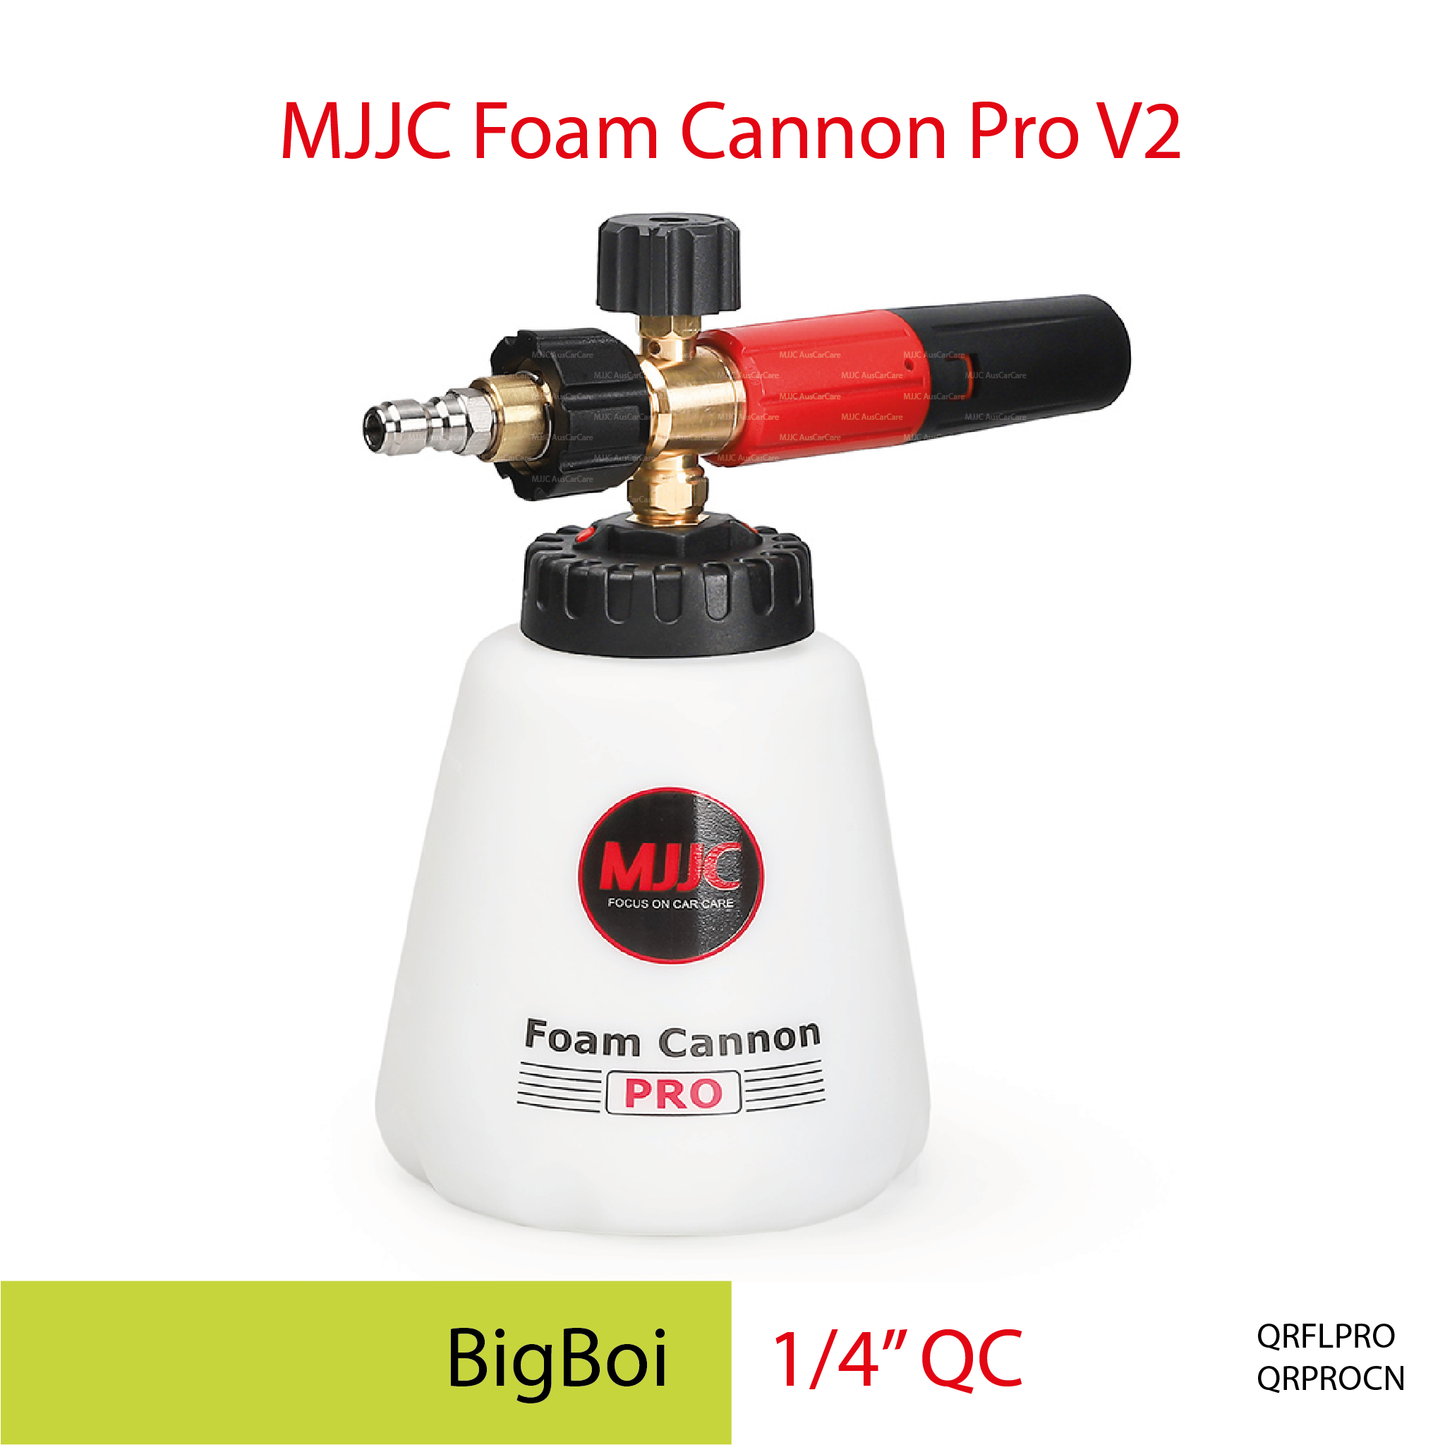 Big Boi pressure washer (1/4" QC) - MJJC Foam Cannon Pro V2 (Pressure Washer Snow Foam Lance Gun)